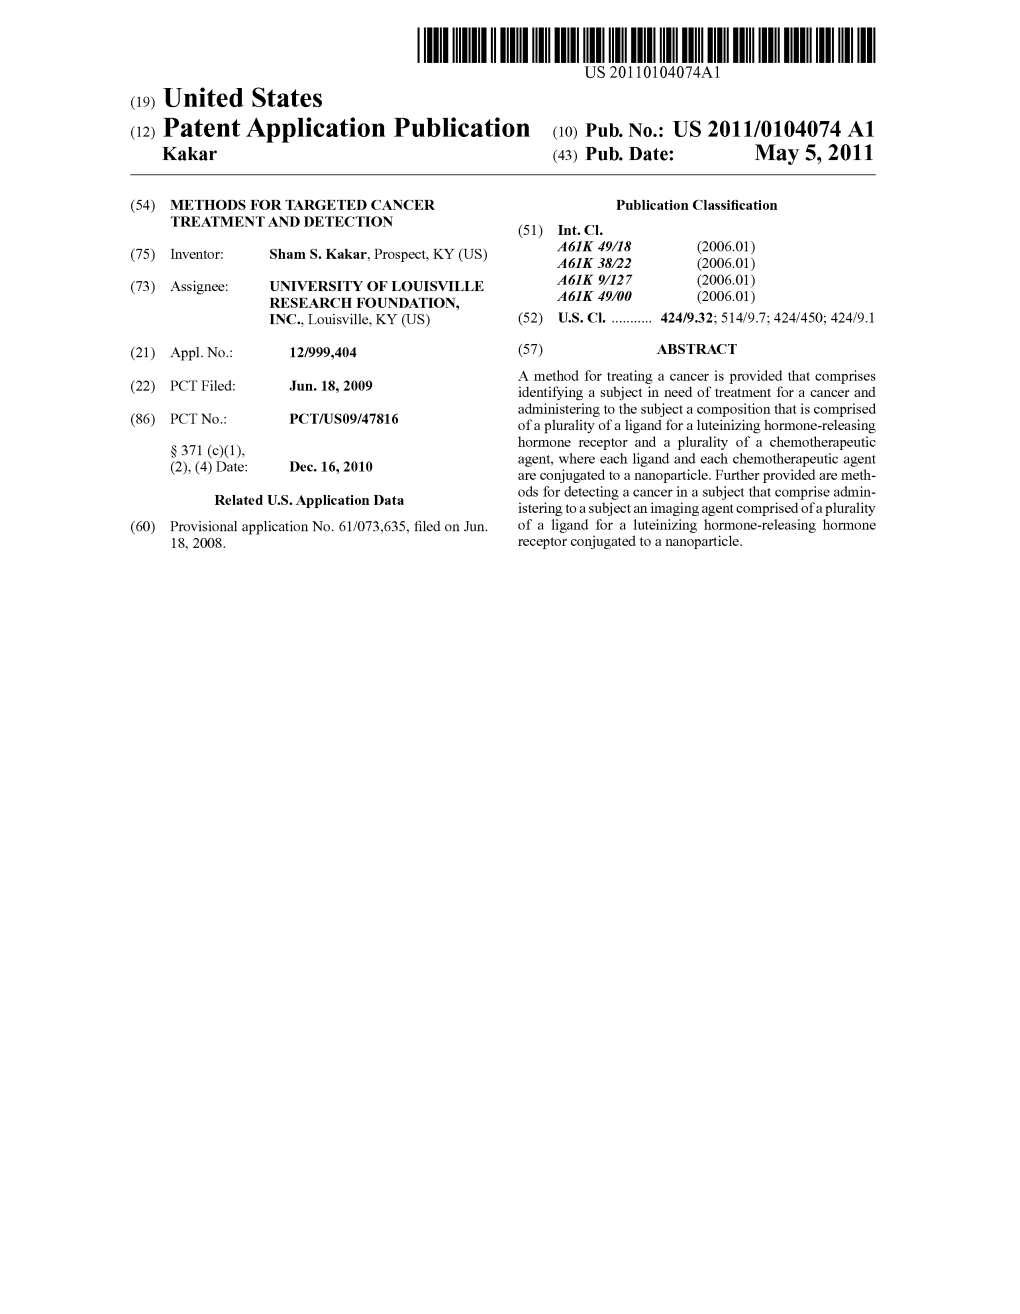 (12) Patent Application Publication (10) Pub. No.: US 2011/0104074 A1 Kakar (43) Pub